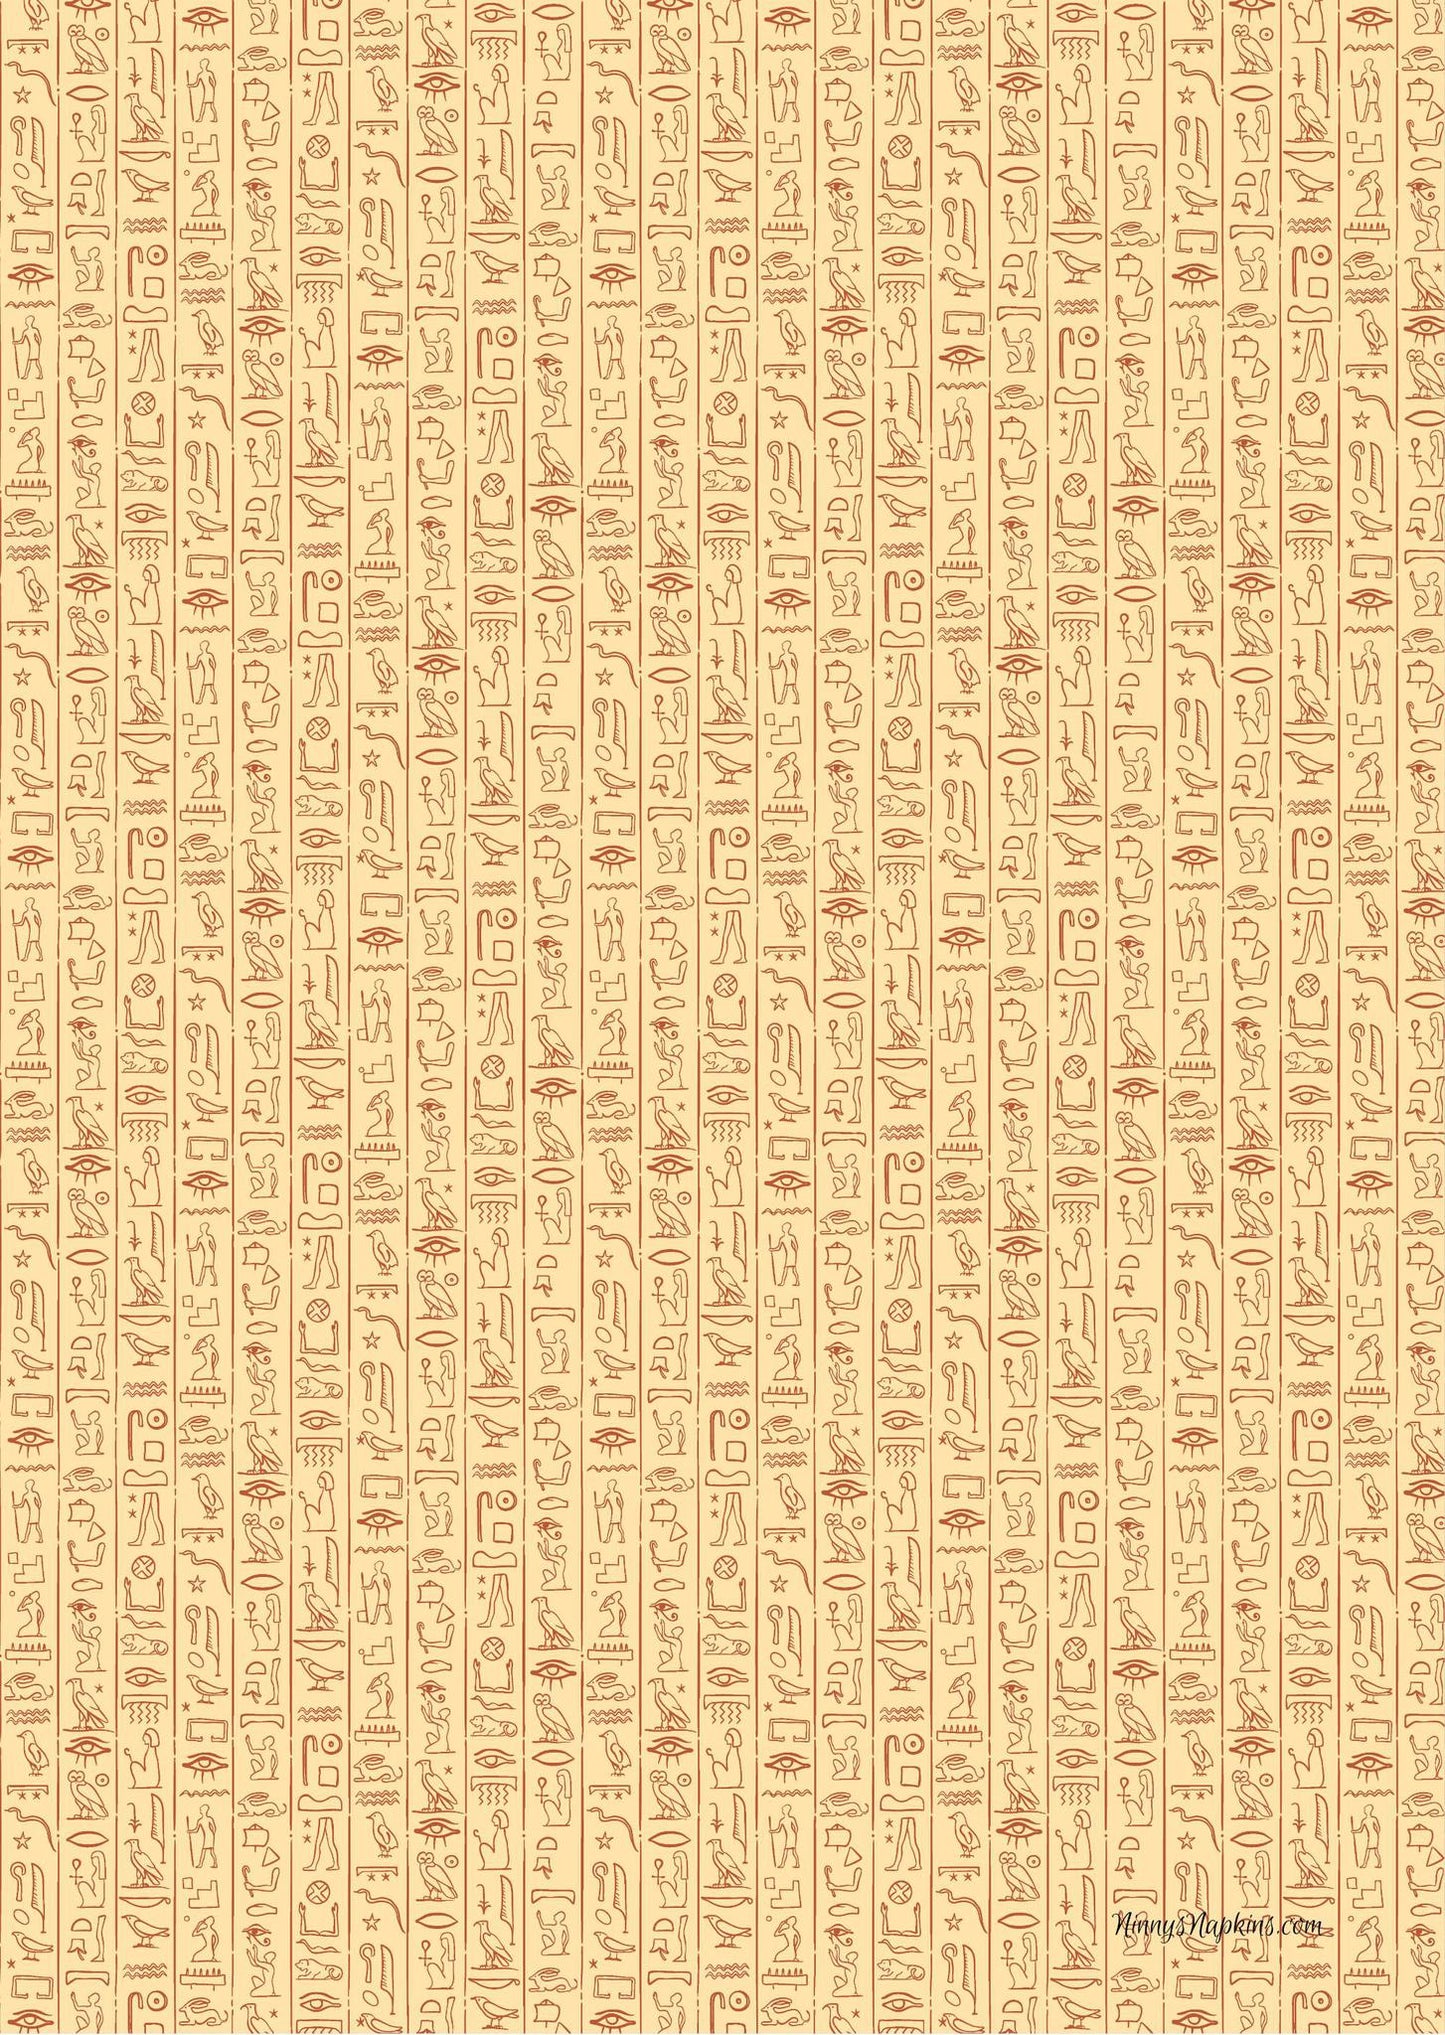 Ninny's Rice Paper A3 - Hieroglyphs